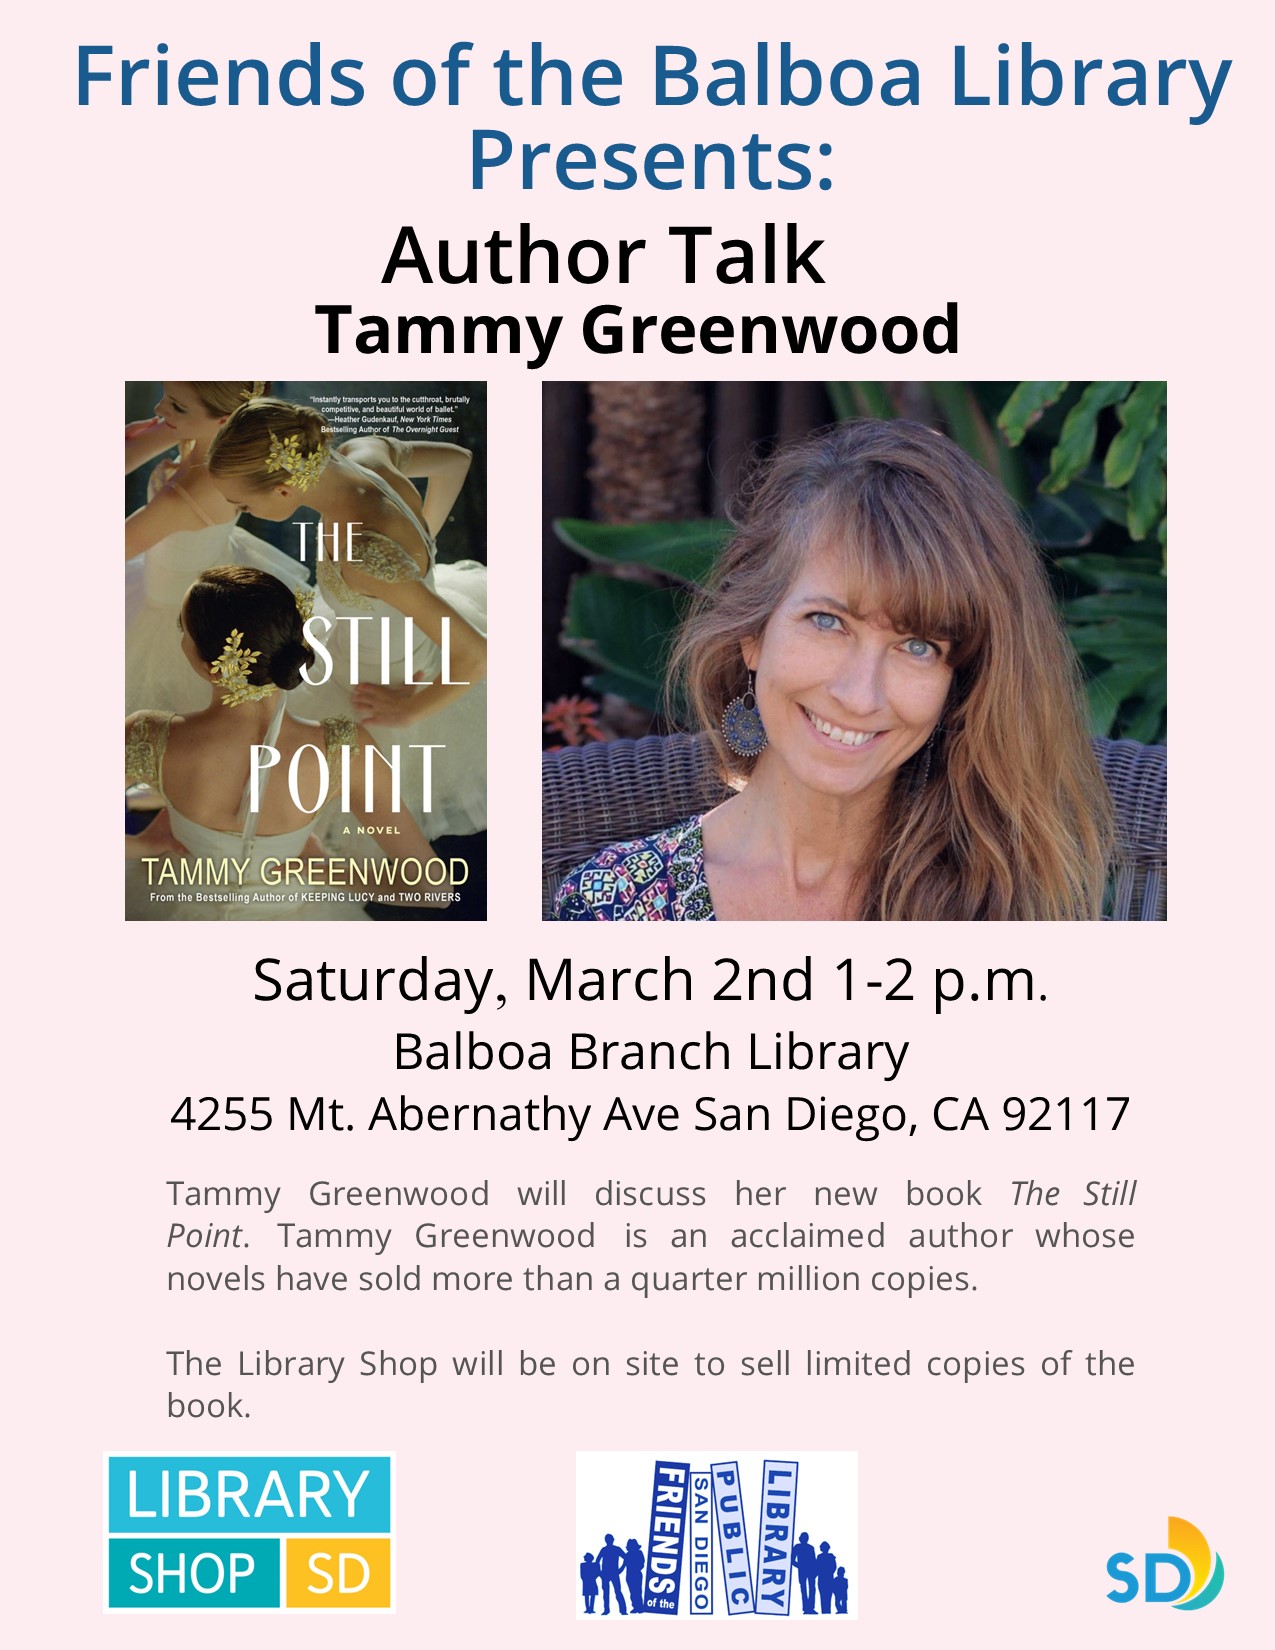 Author Talk Event Tammy Greenwood